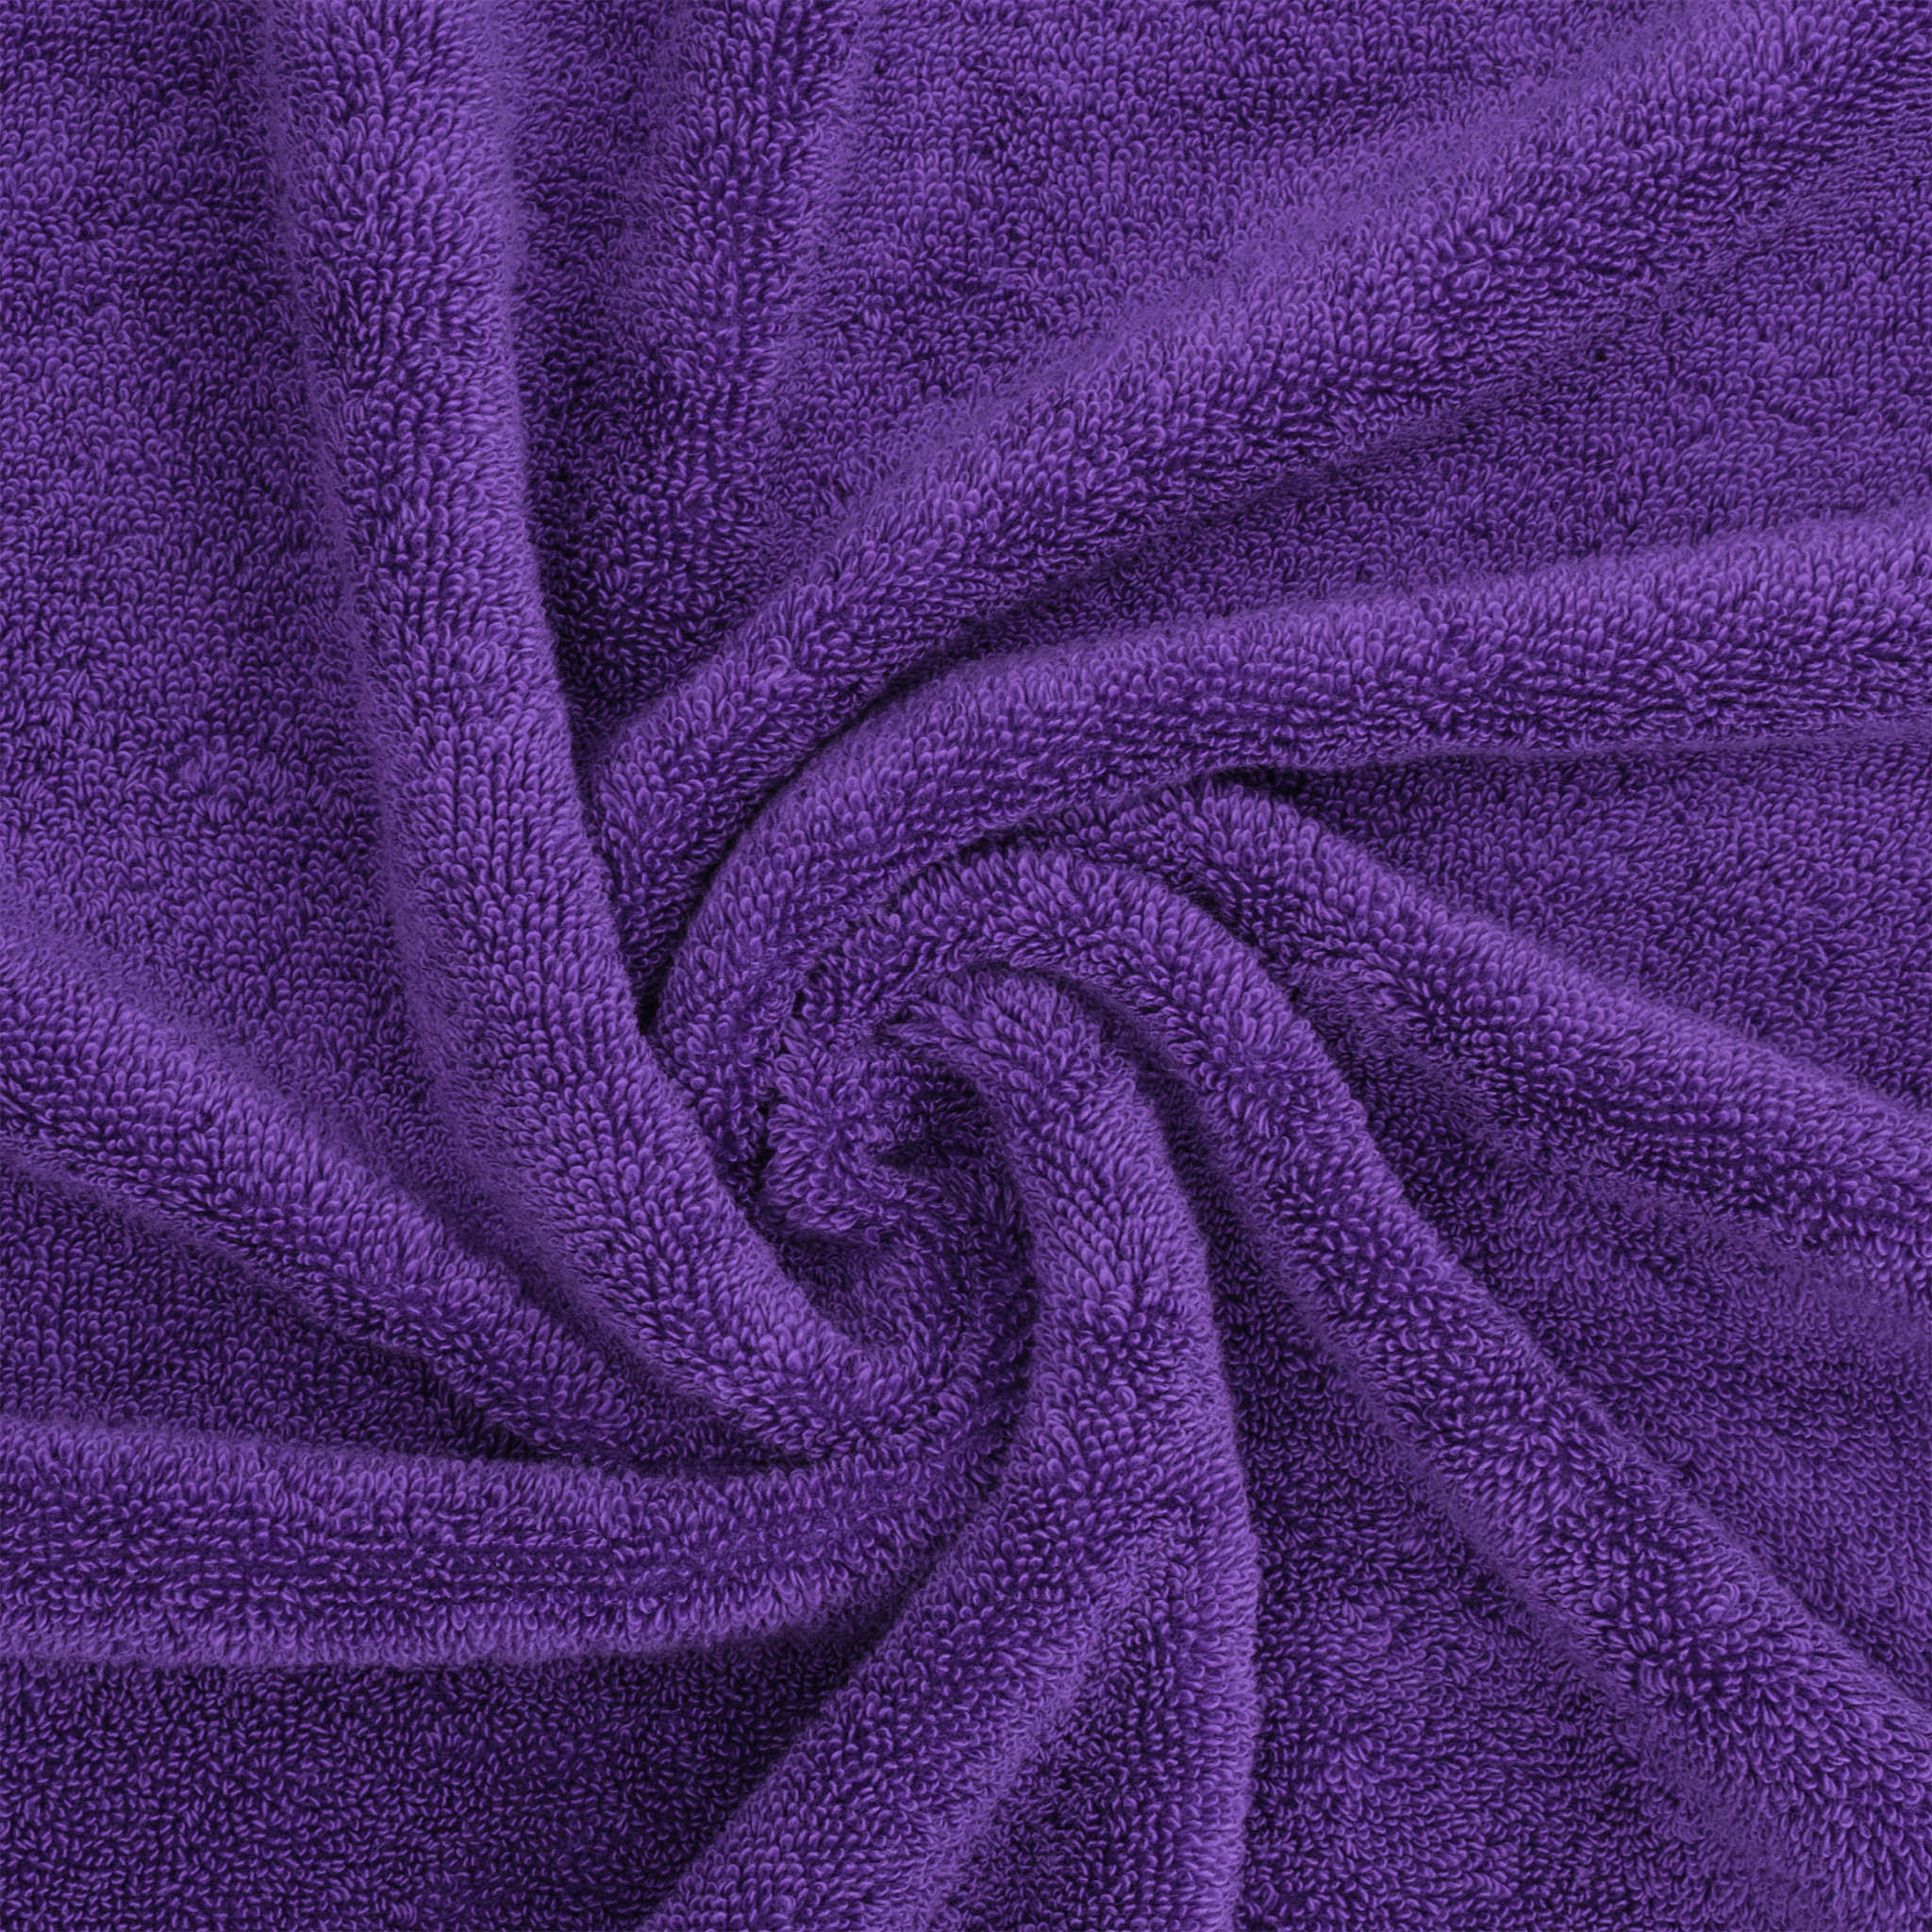 American Soft Linen, 100% Turkish Combed Cotton Luxury, Salem 4 Piece Washcloth Set - 60 Set Case Pack -purple-6